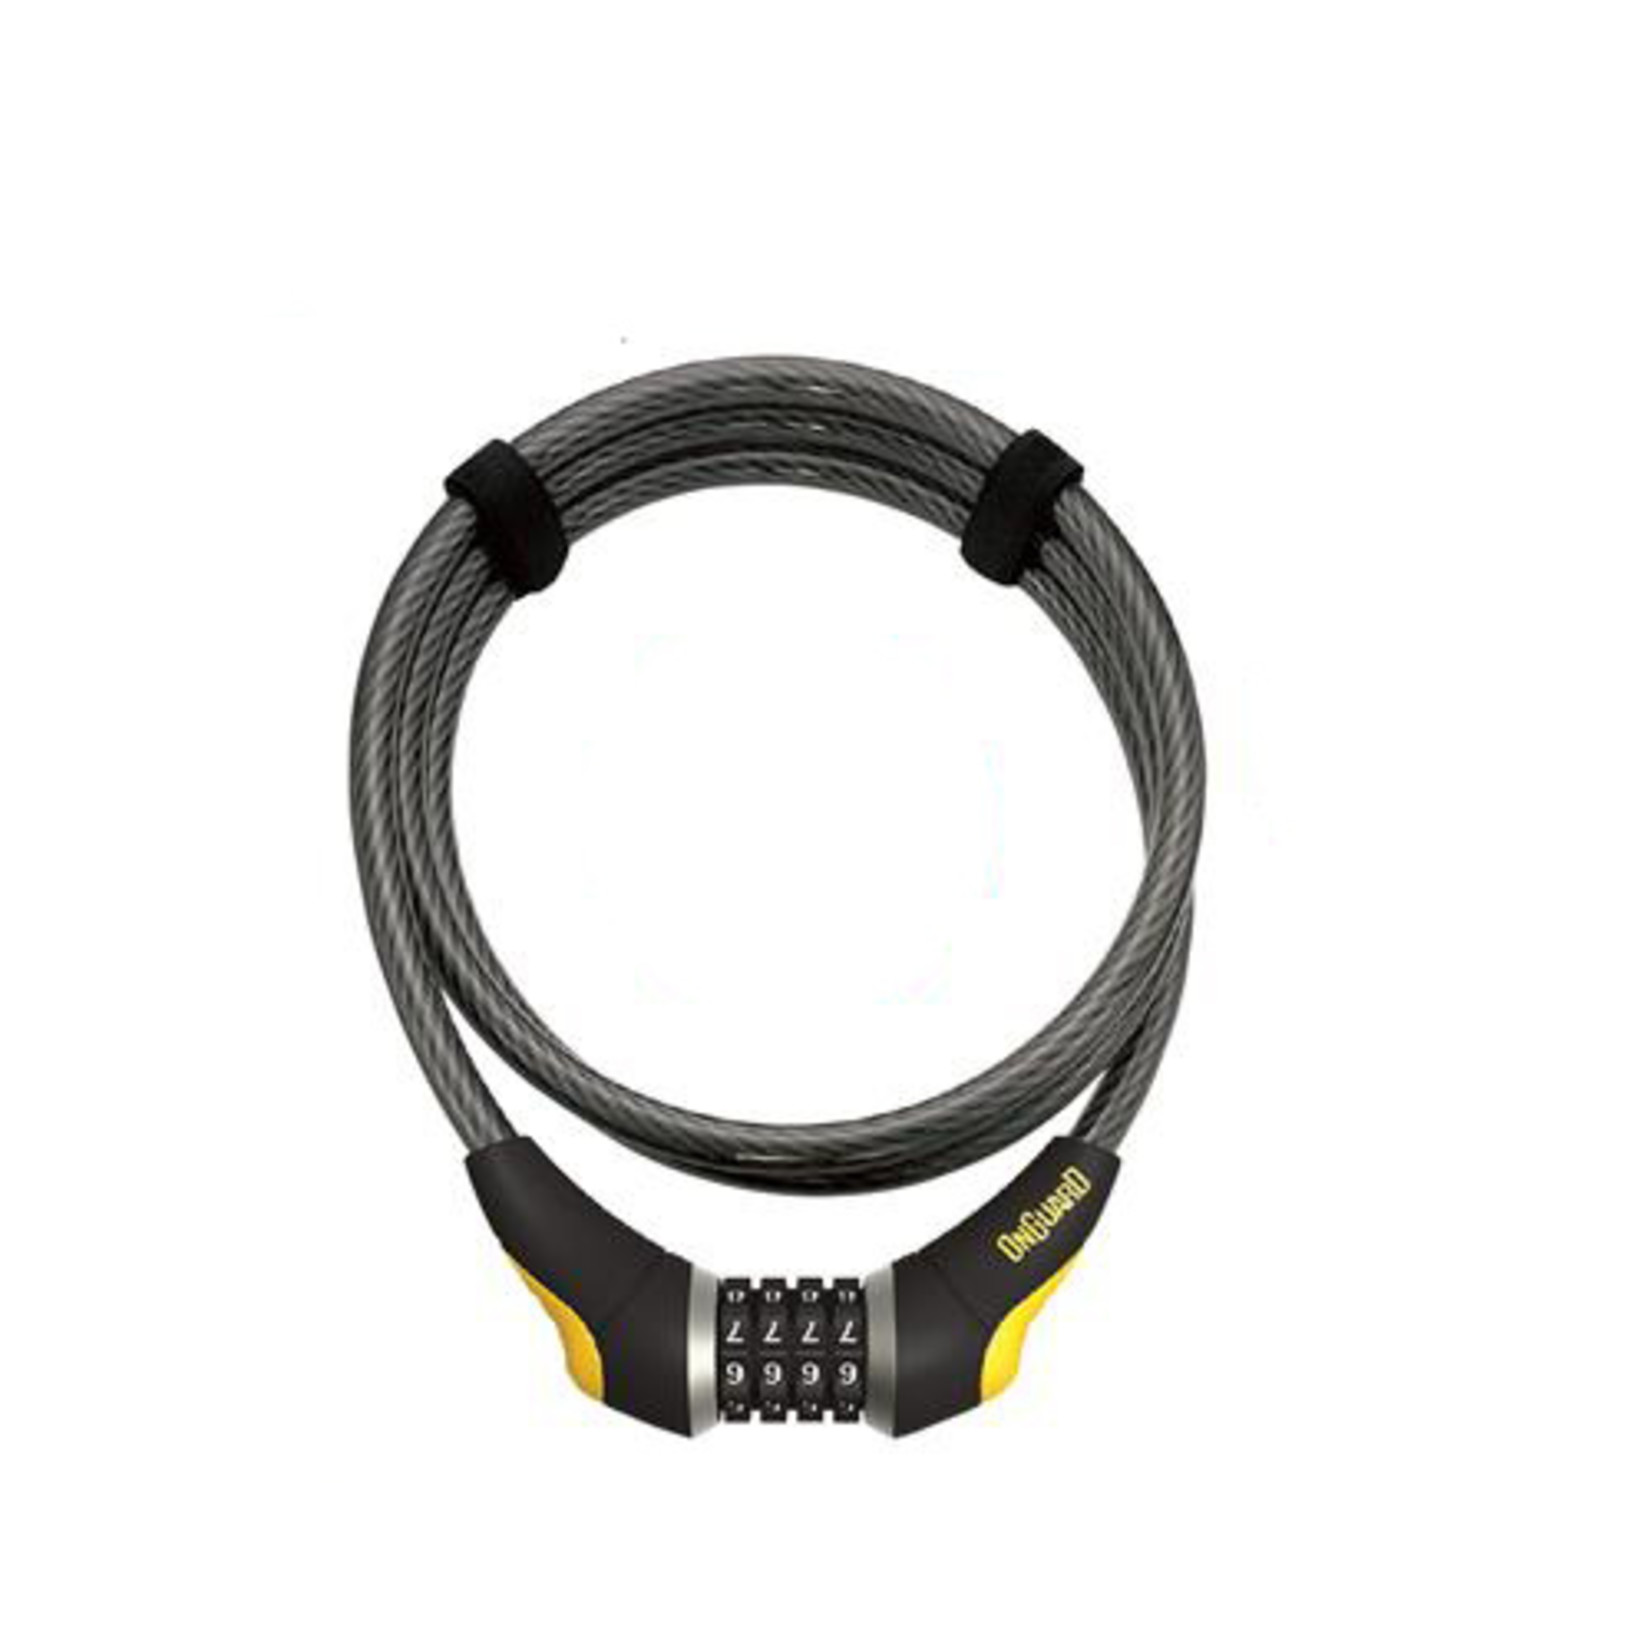 On Goard Onguard Bike Lock - Akita Series - Coiled Cable - 185cm x 12mm